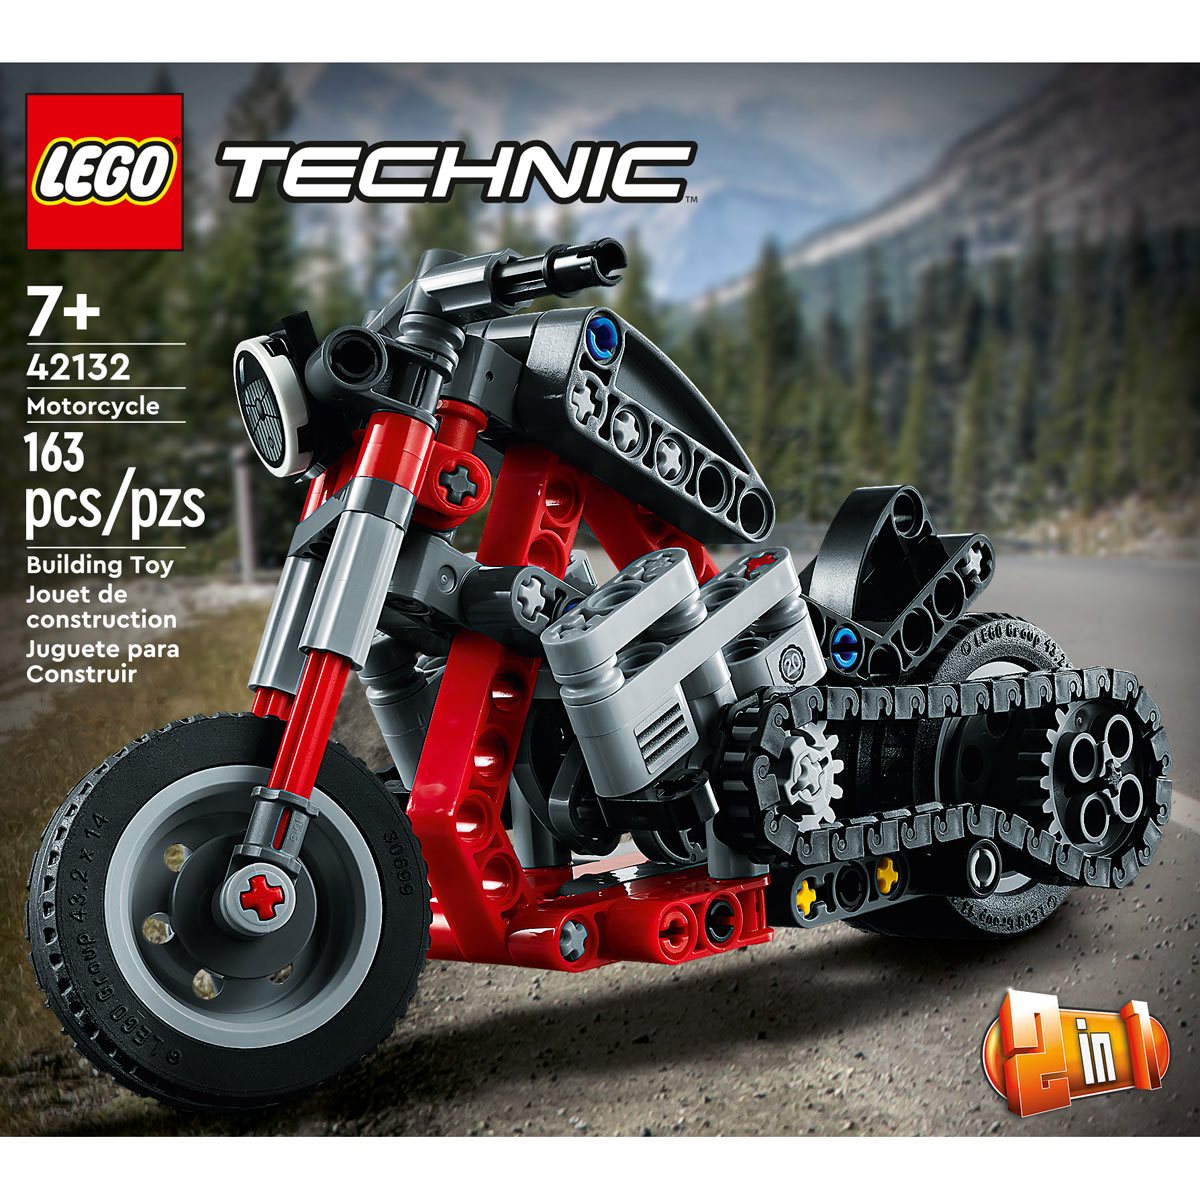 LEGO 42132 Technic Motorcycle - Entertainment Earth